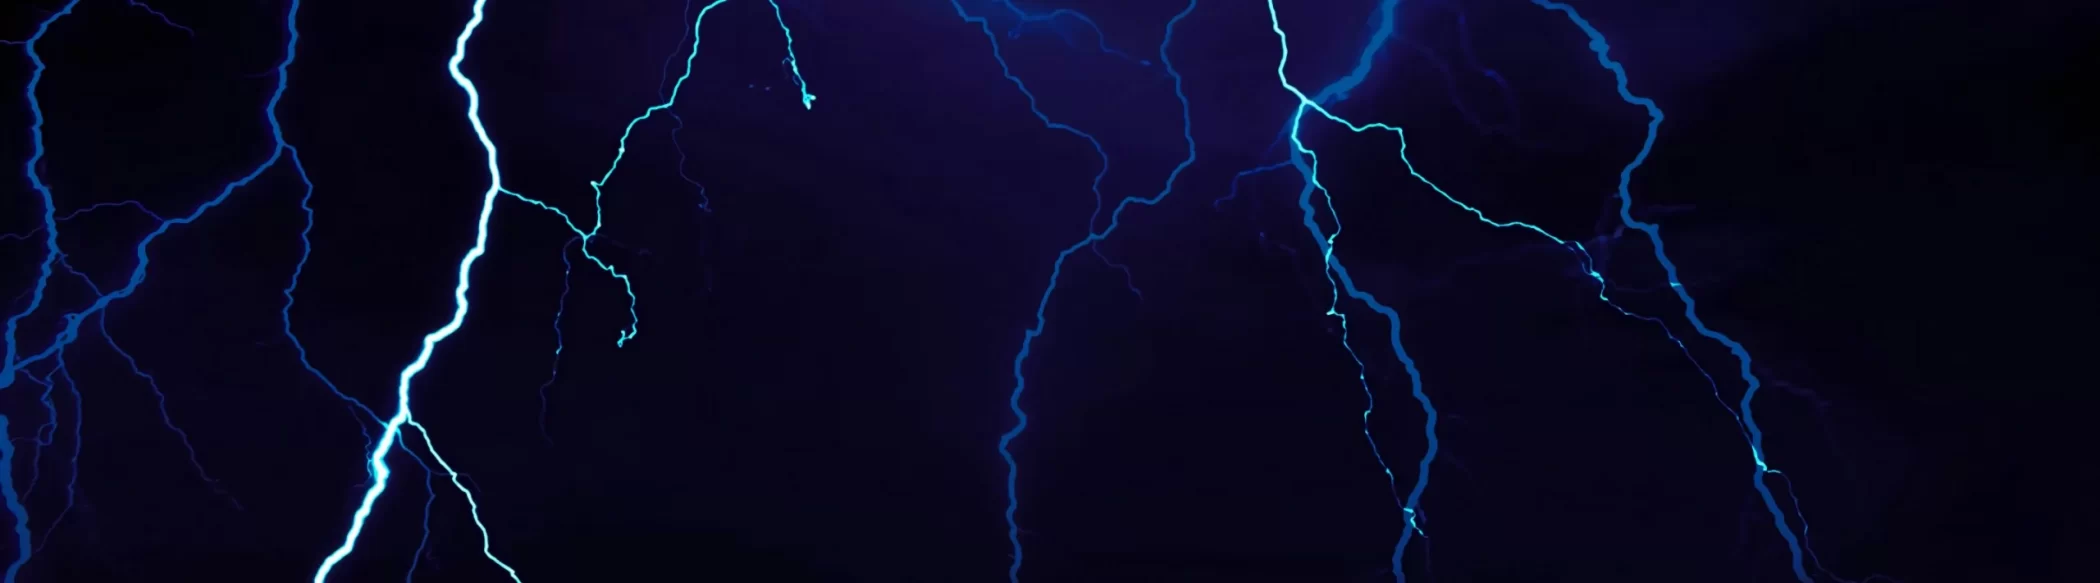 Lightning bolts in the night sky